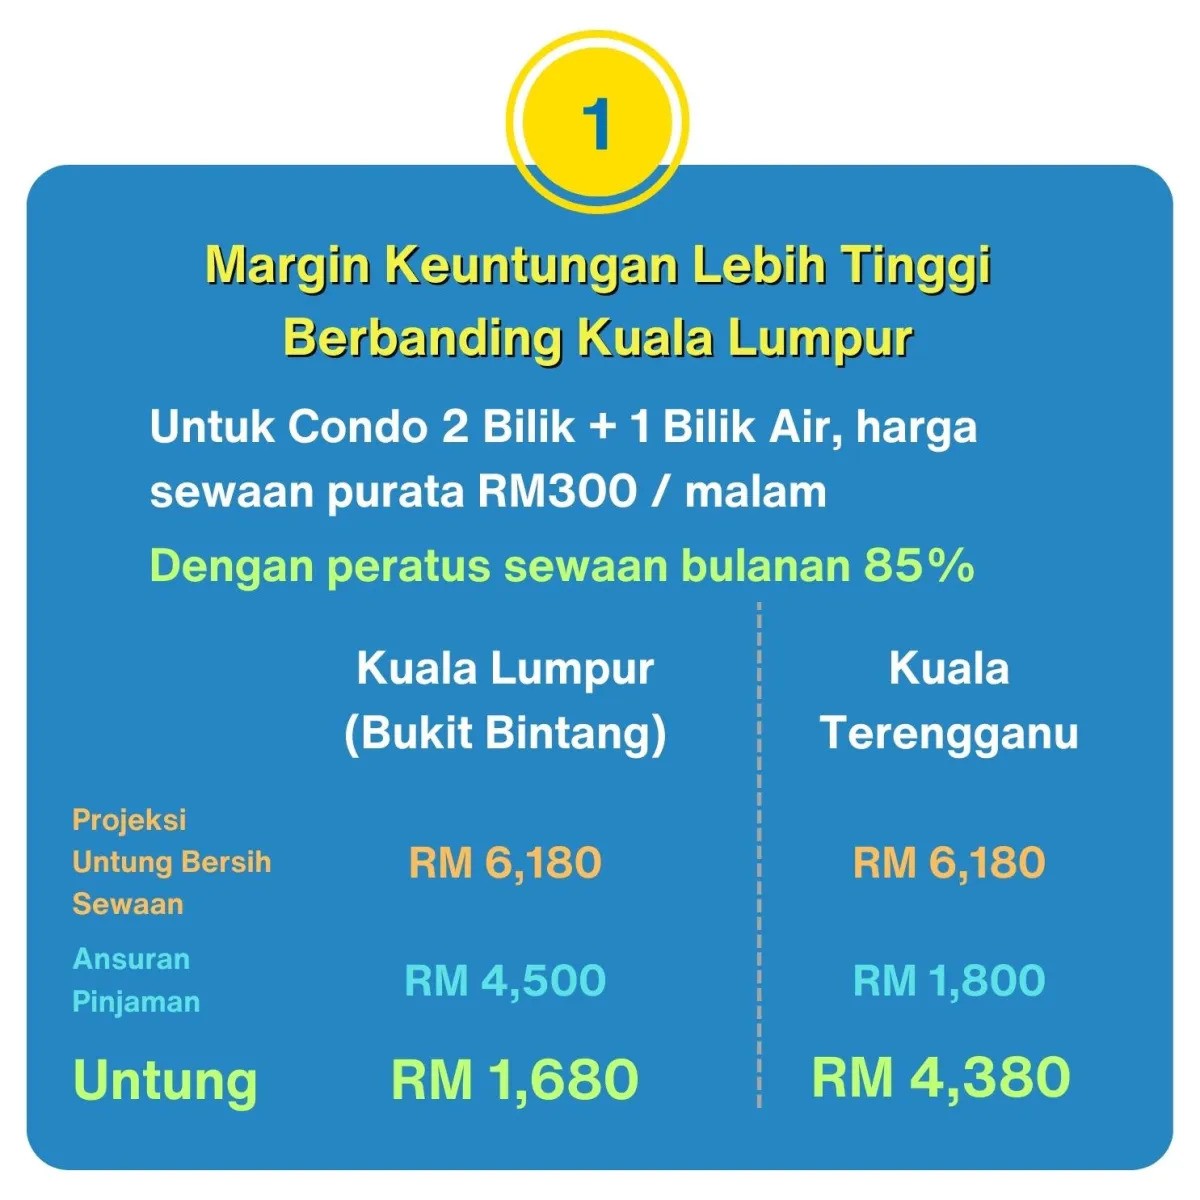 Airbnb Suites Development, Kuala Terengganu